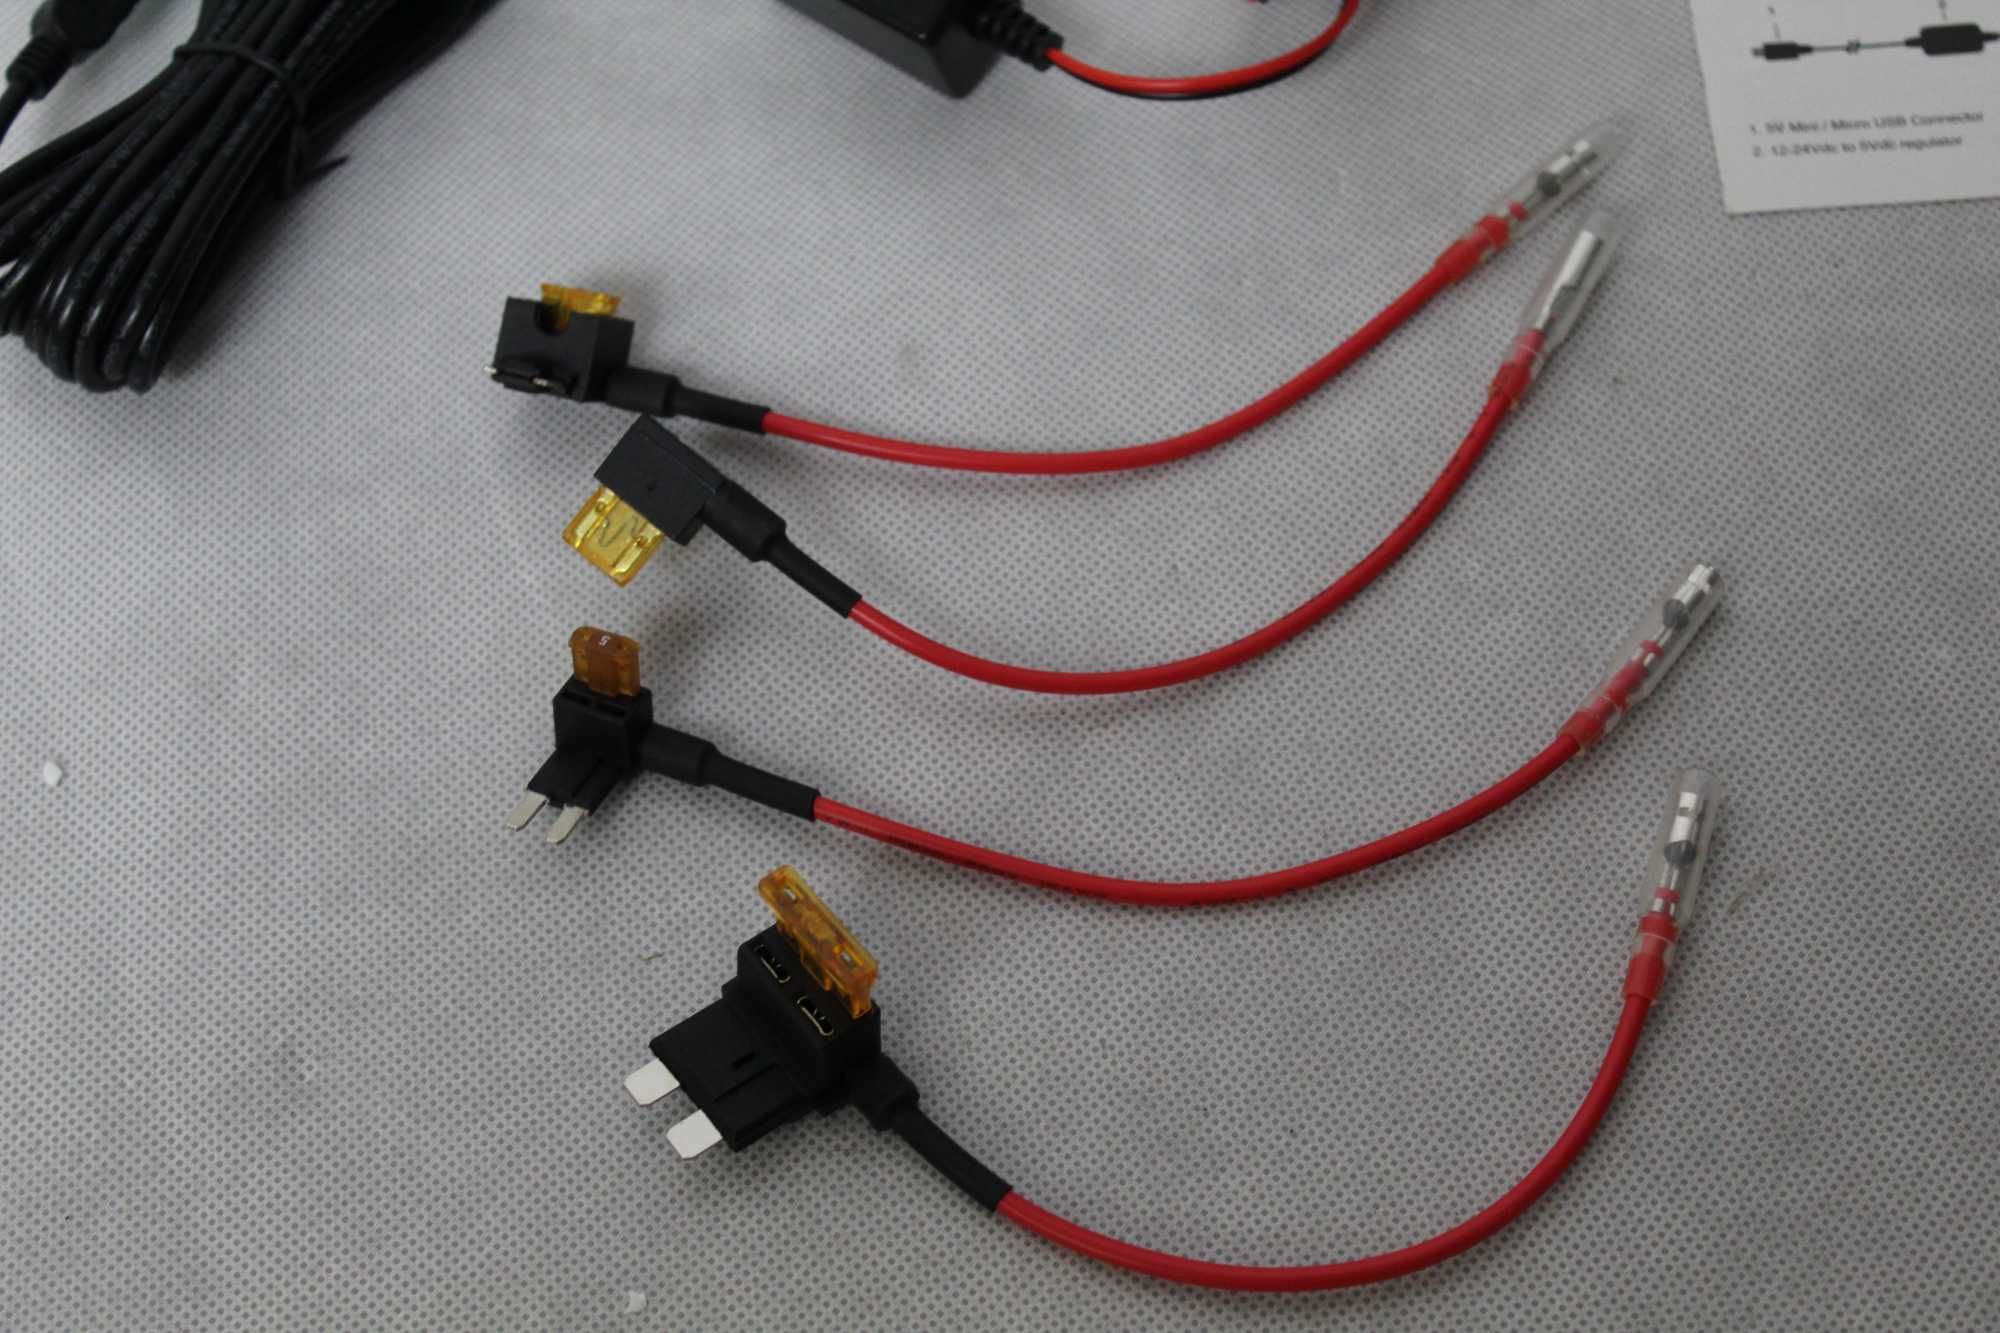 Dashcam Hardwire Kit mini  USB ładowarka  5V